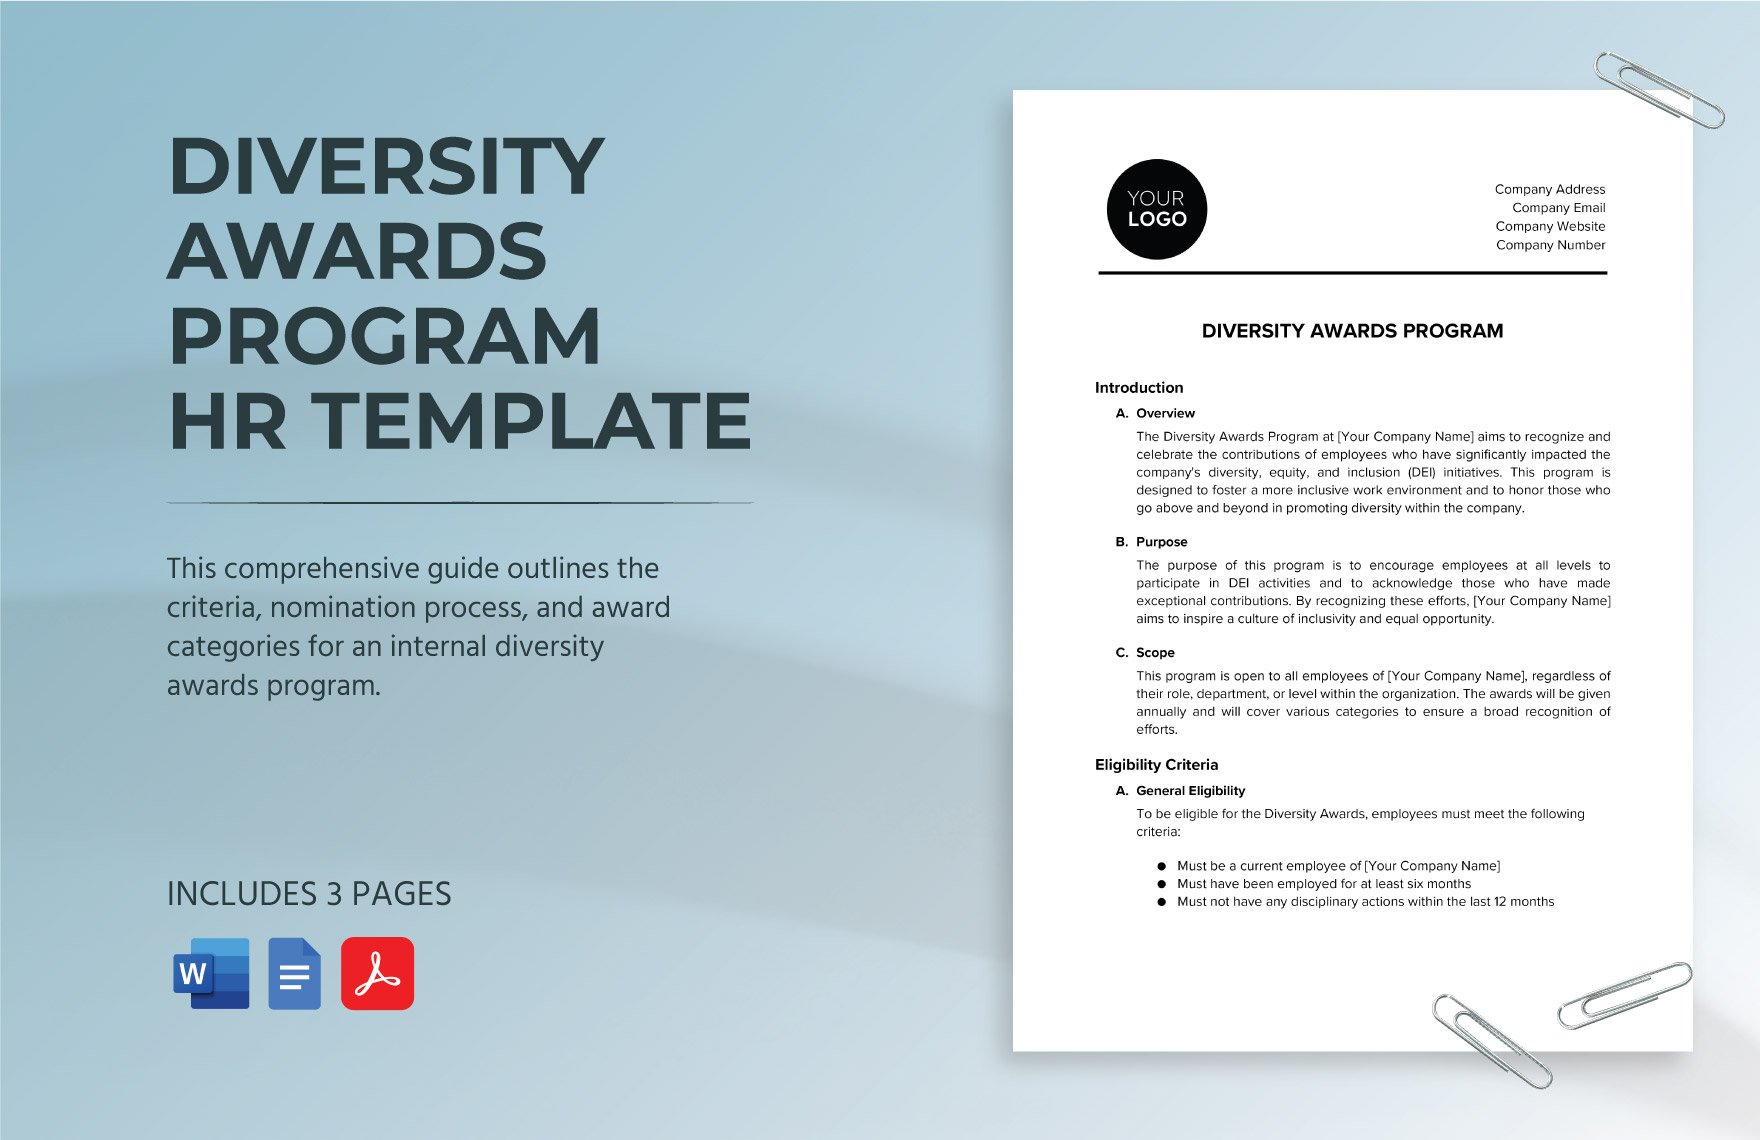 Diversity Awards Program HR Template in Word, Google Docs, PDF